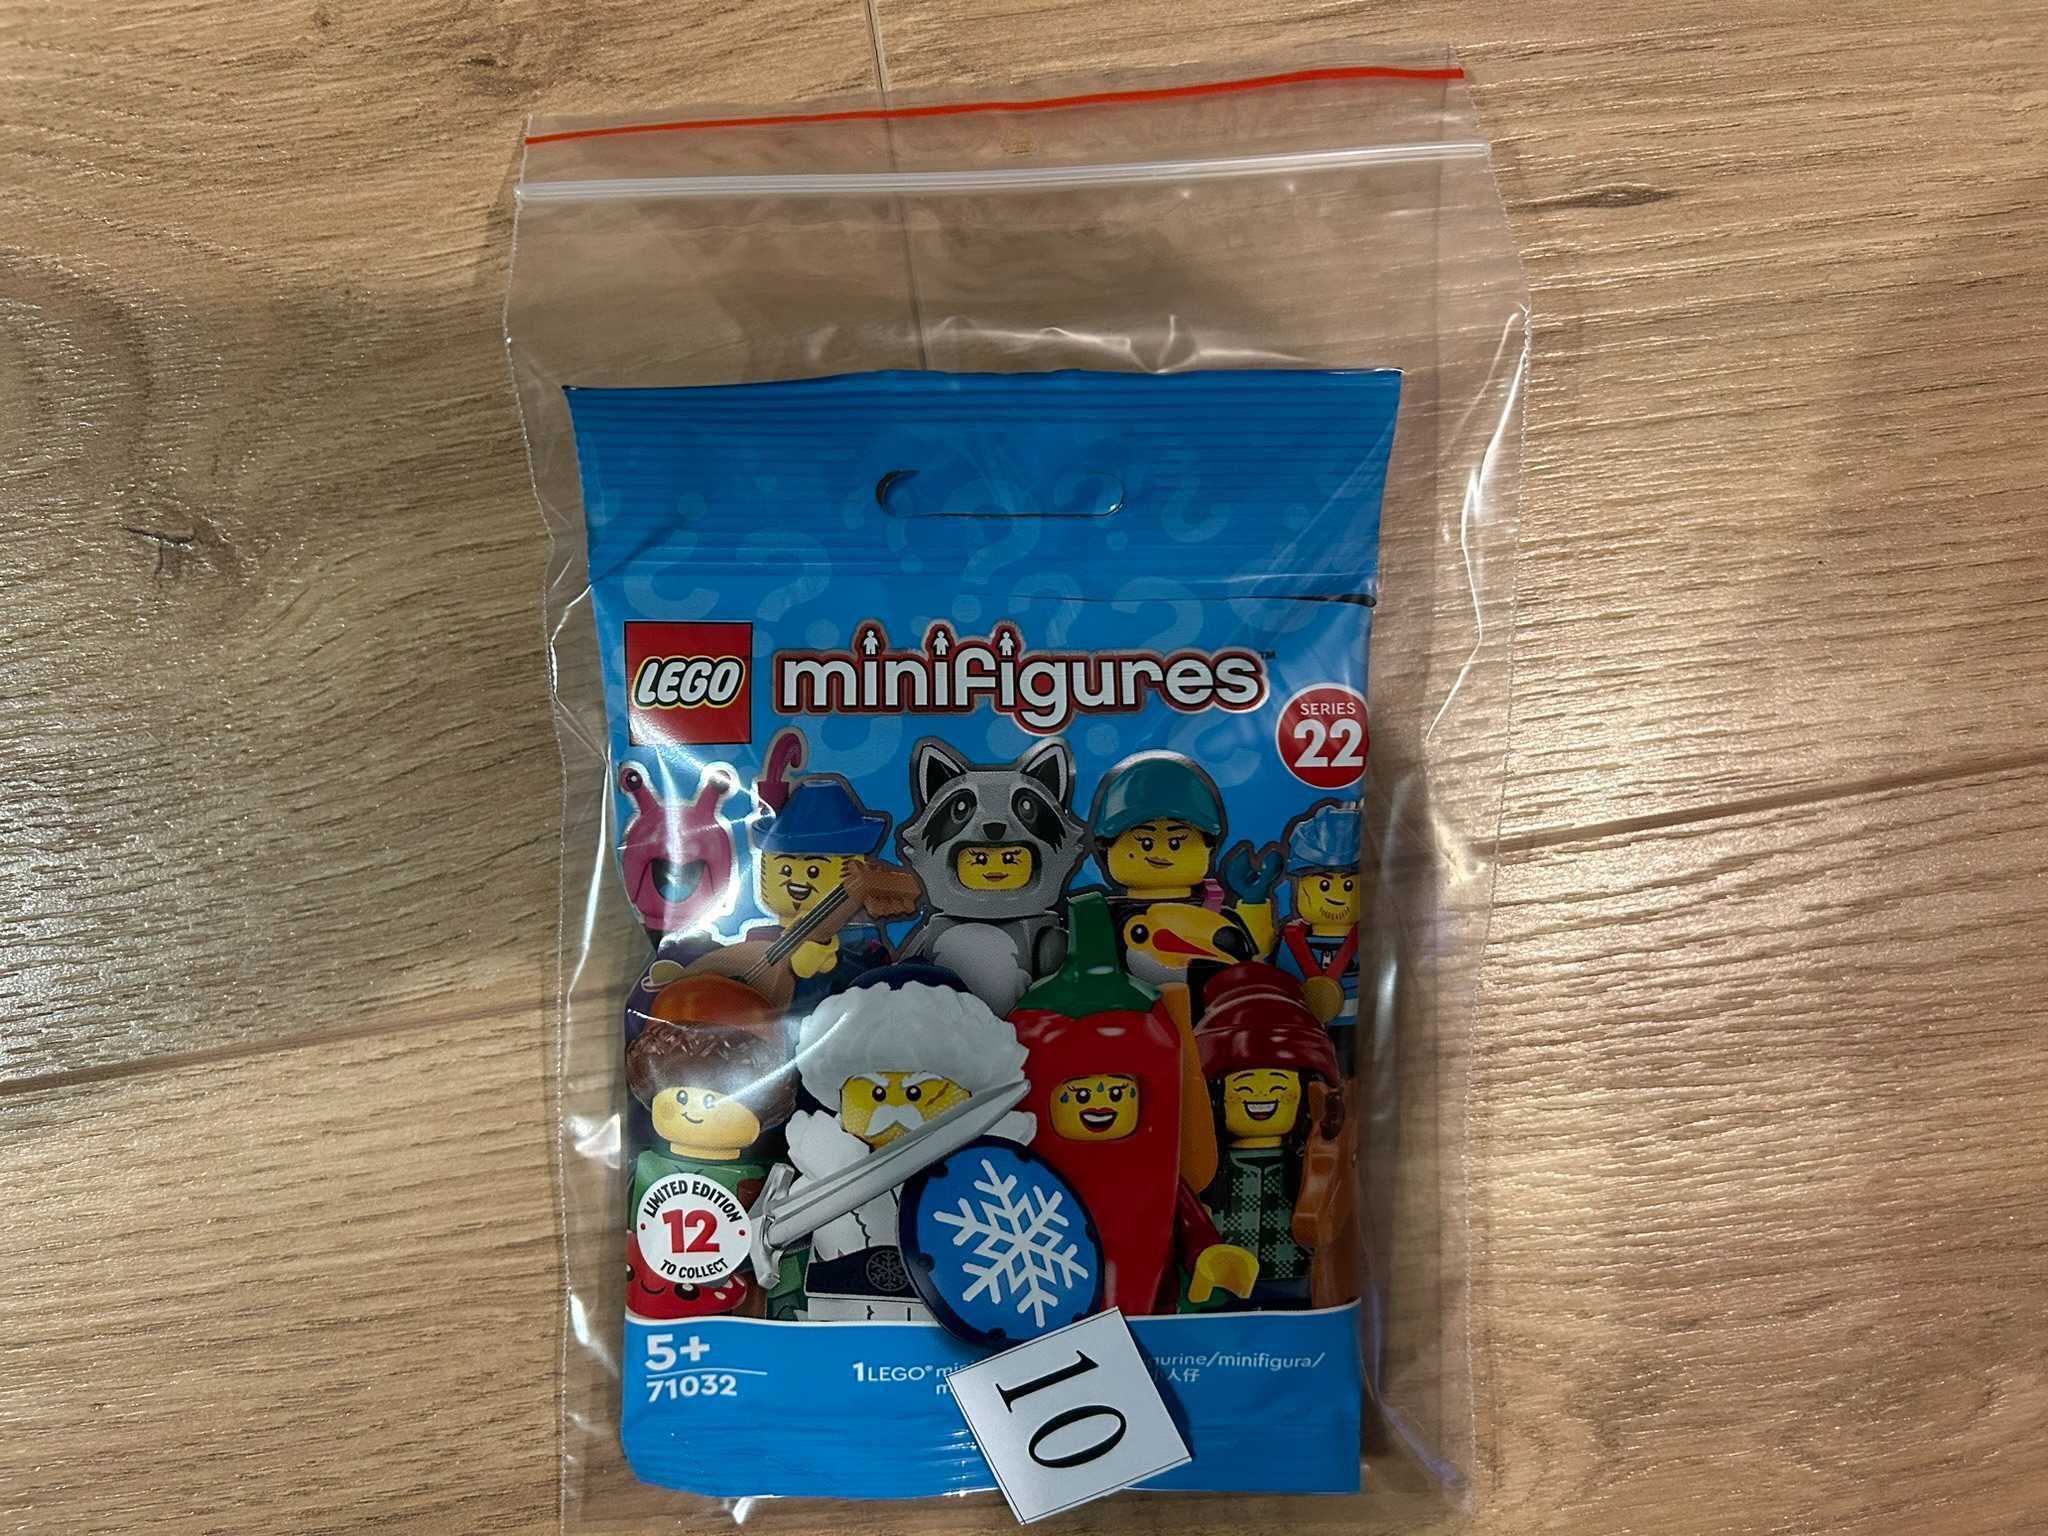 Lego minifigures - 22 seria - Kobieta szop